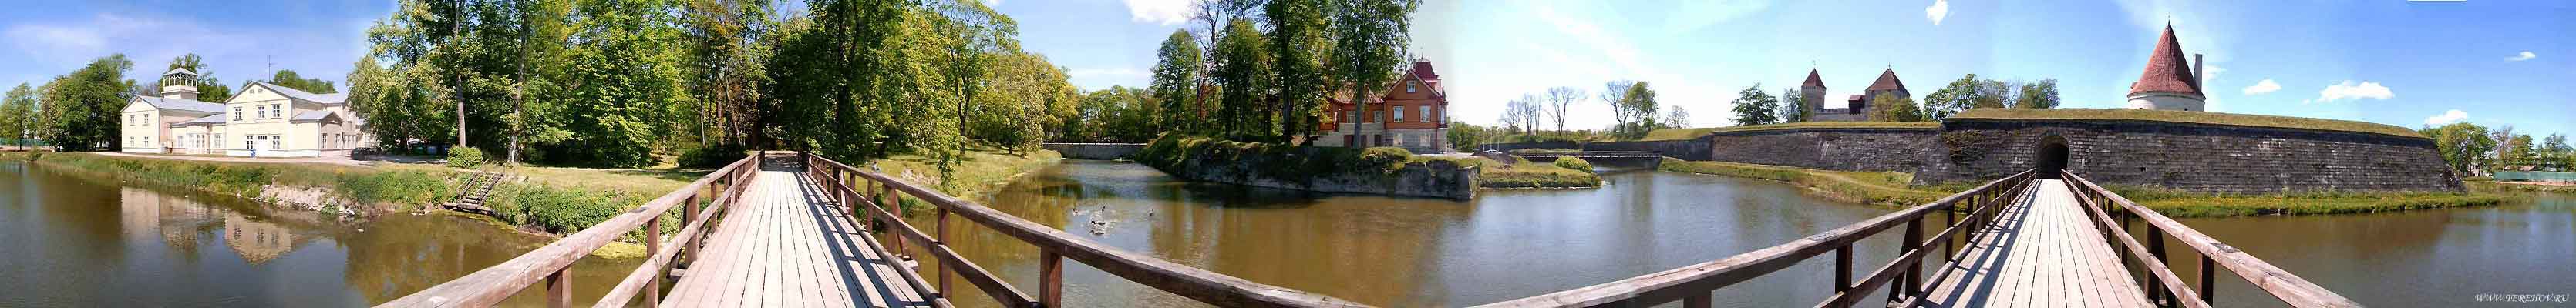 Панорама замка Епископа, в городе Курессааре (Kuressaare), на острове Сааремаа (Saaremaa), Эстония.